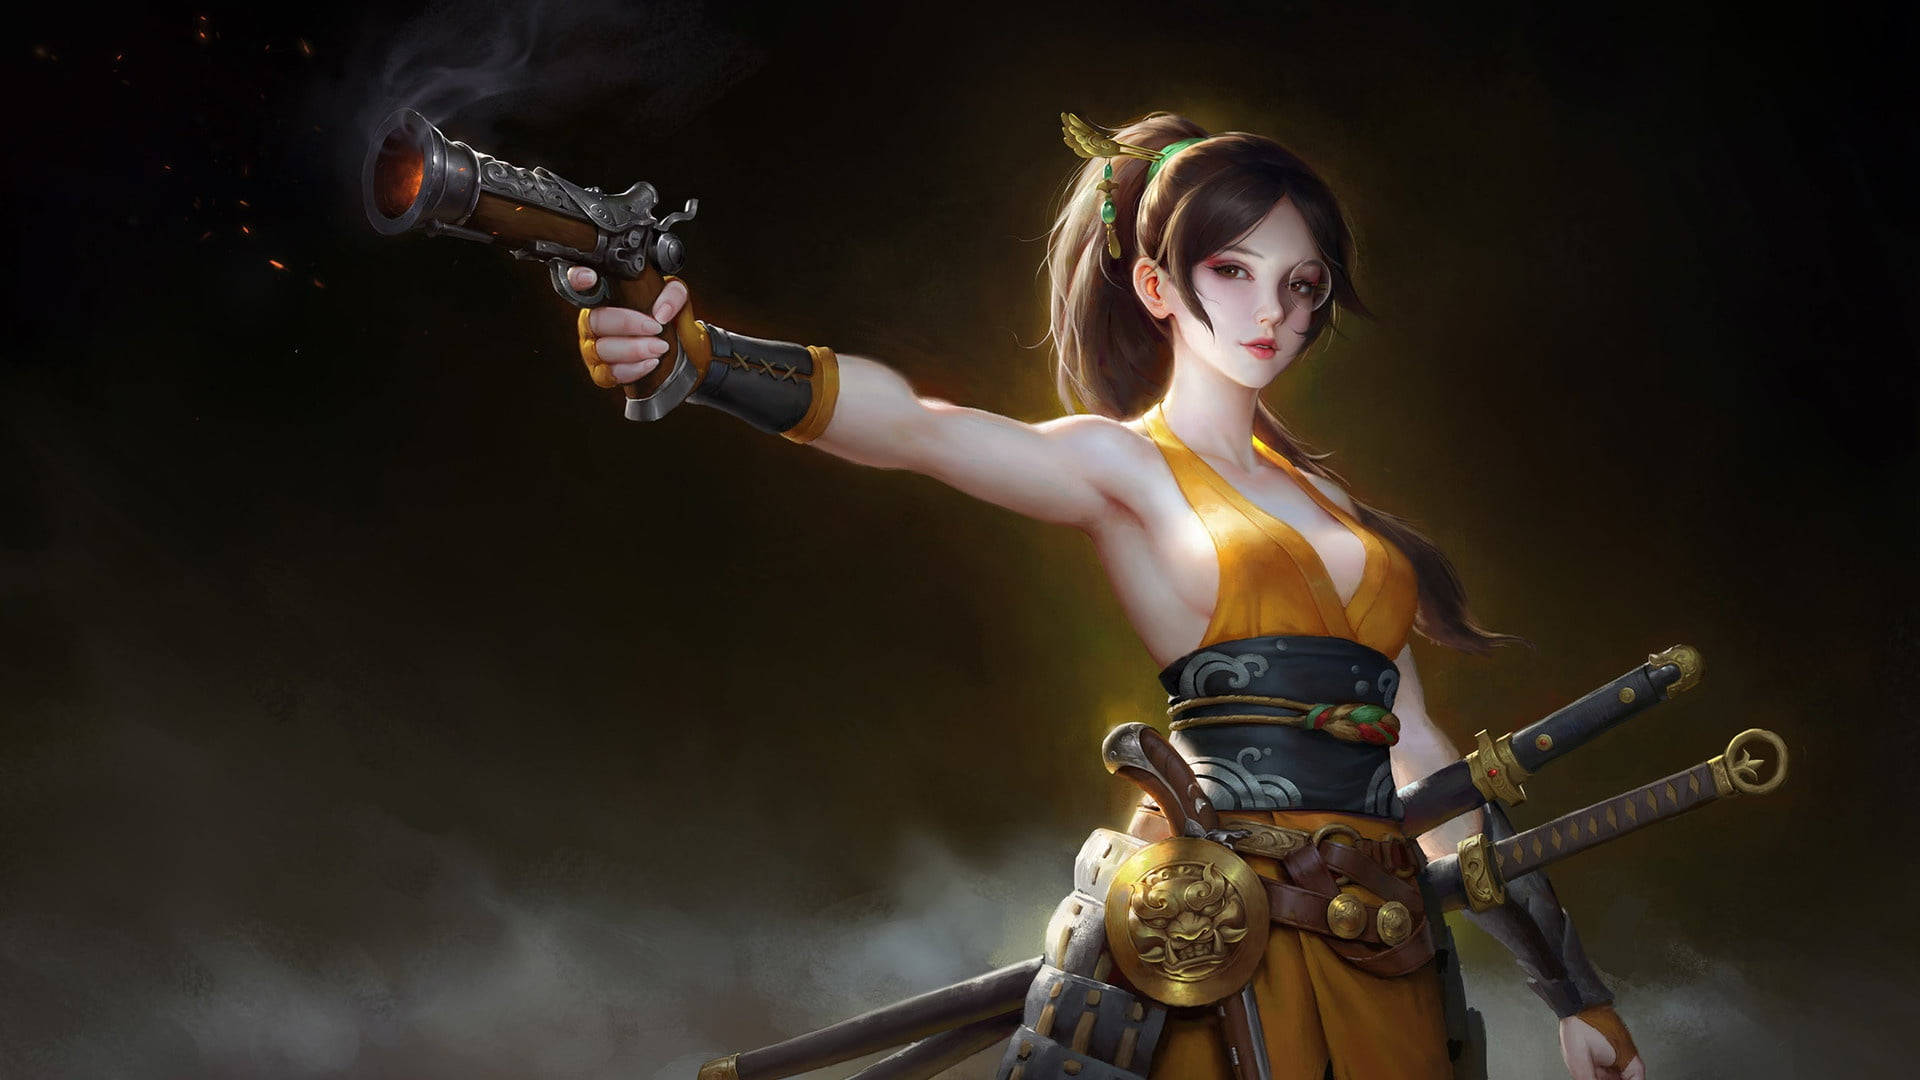 Samurai Girl With Gun